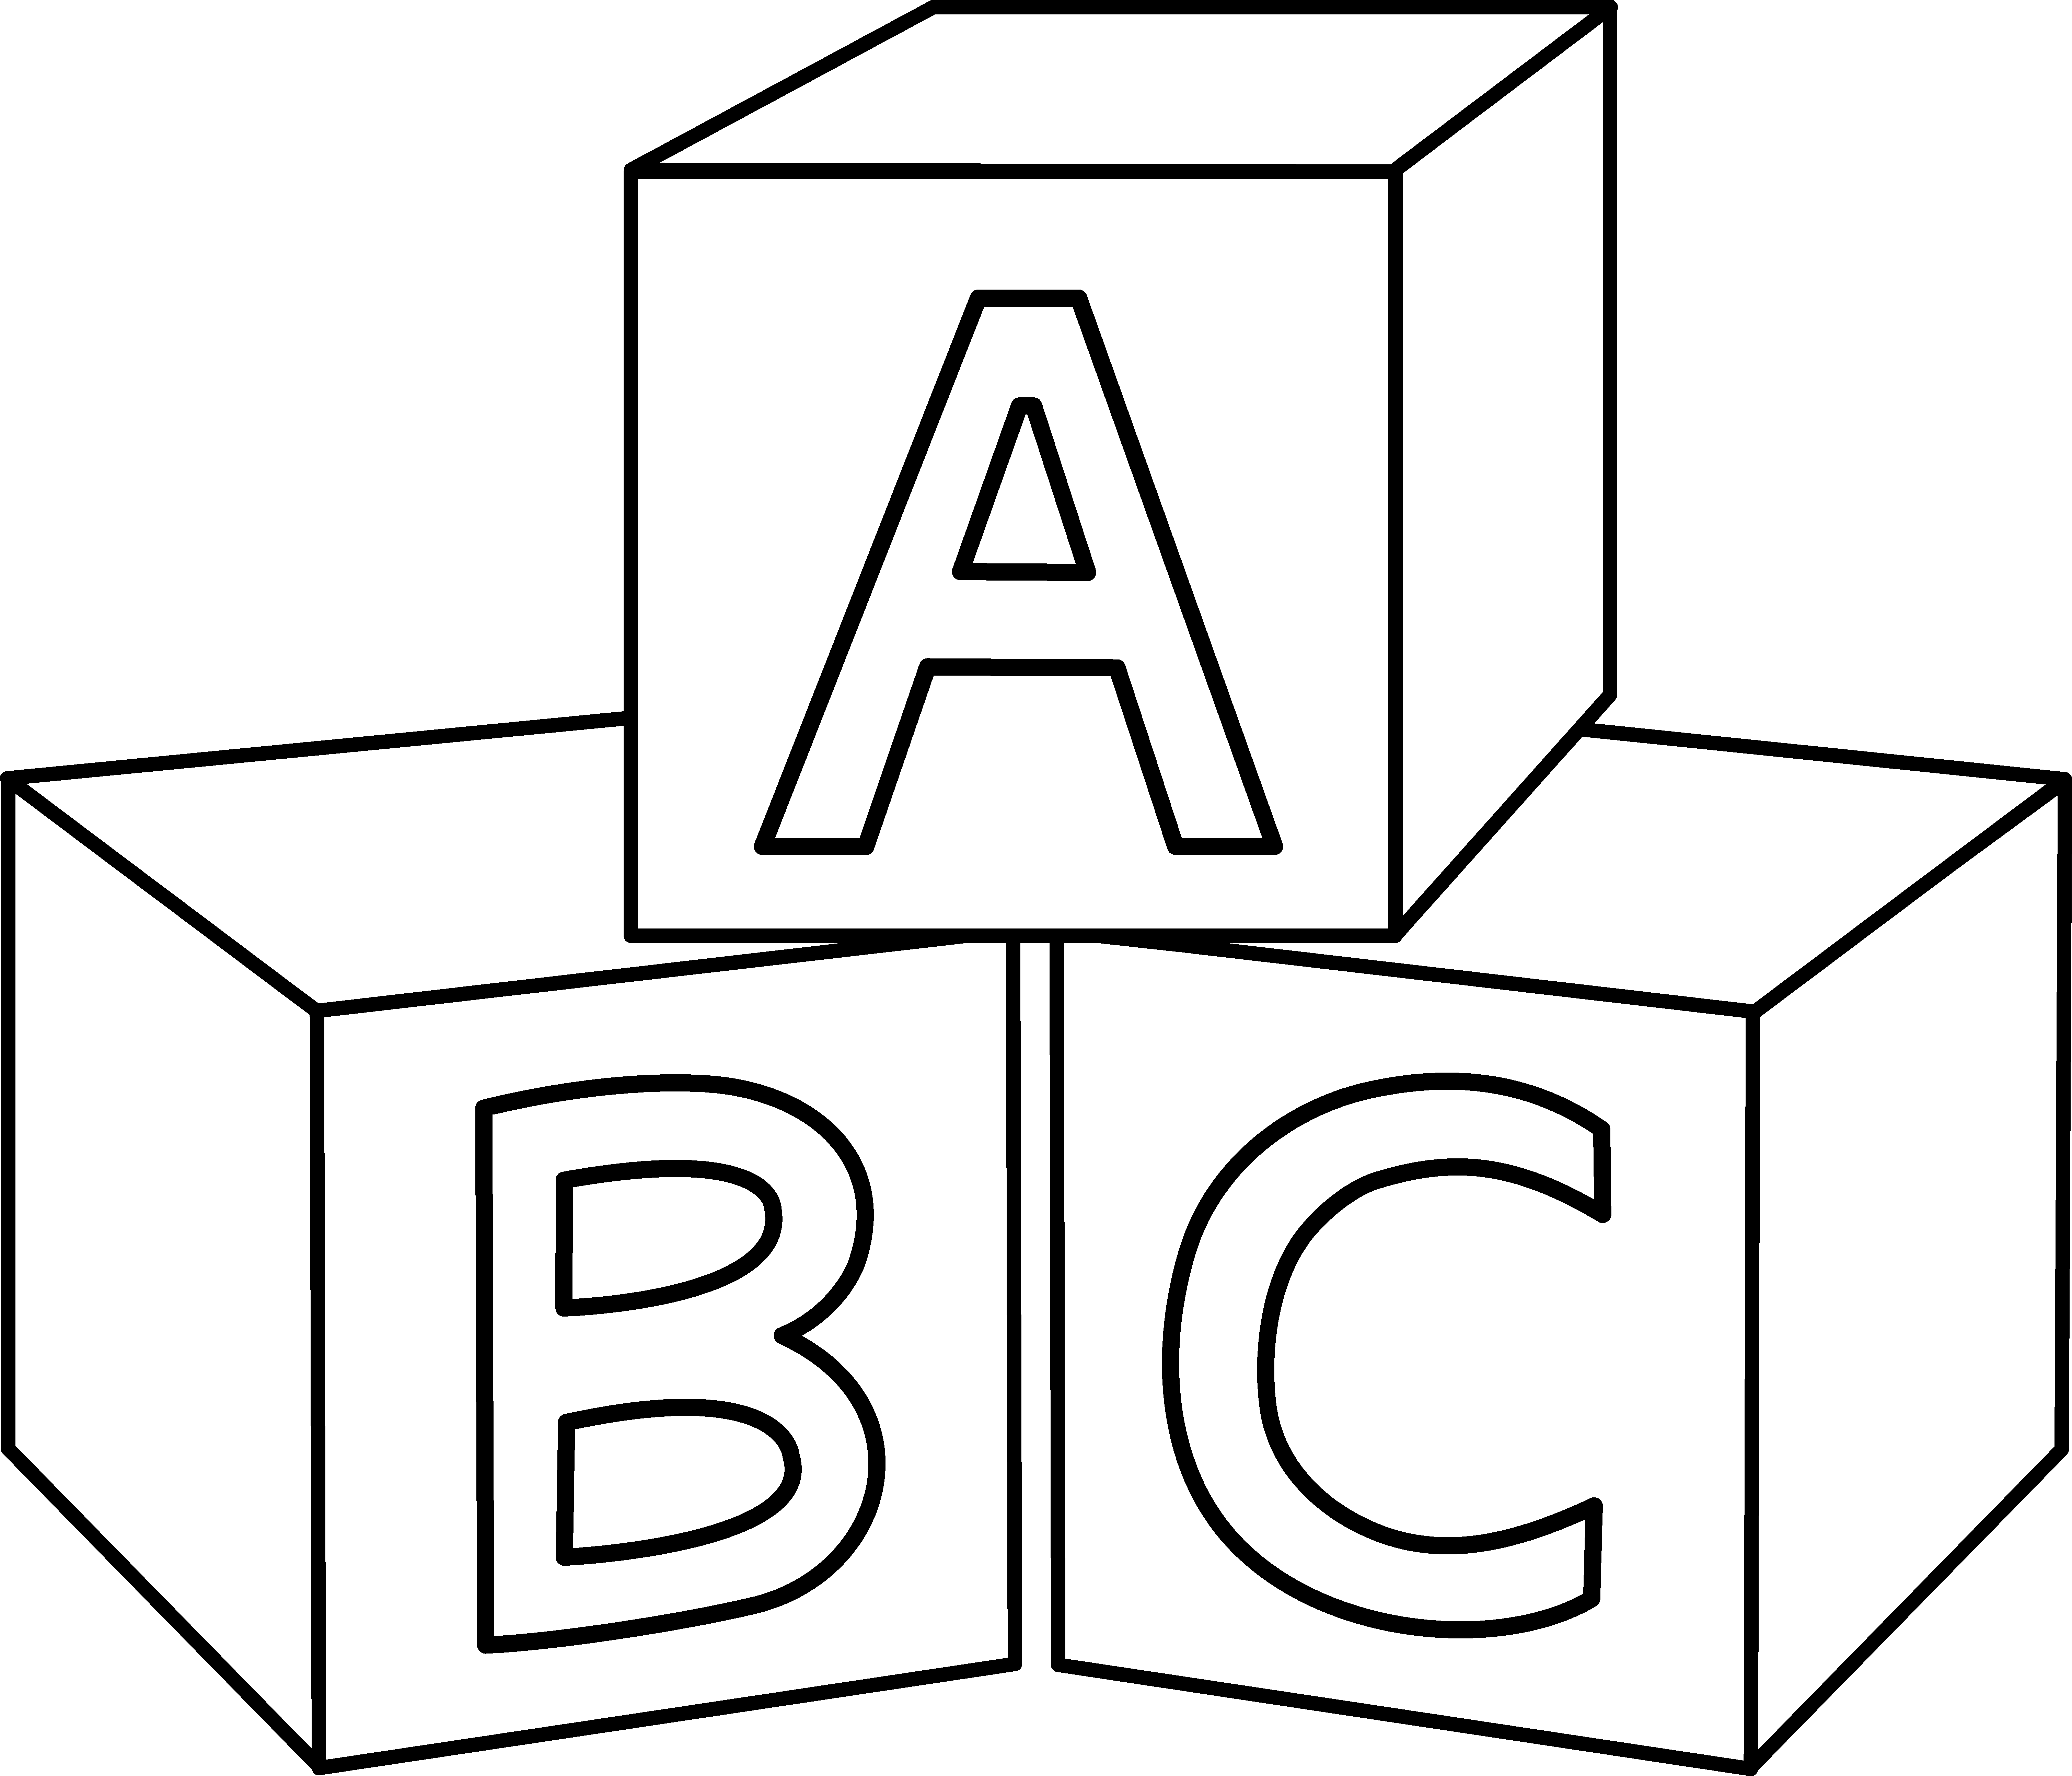 abc blocks black and white